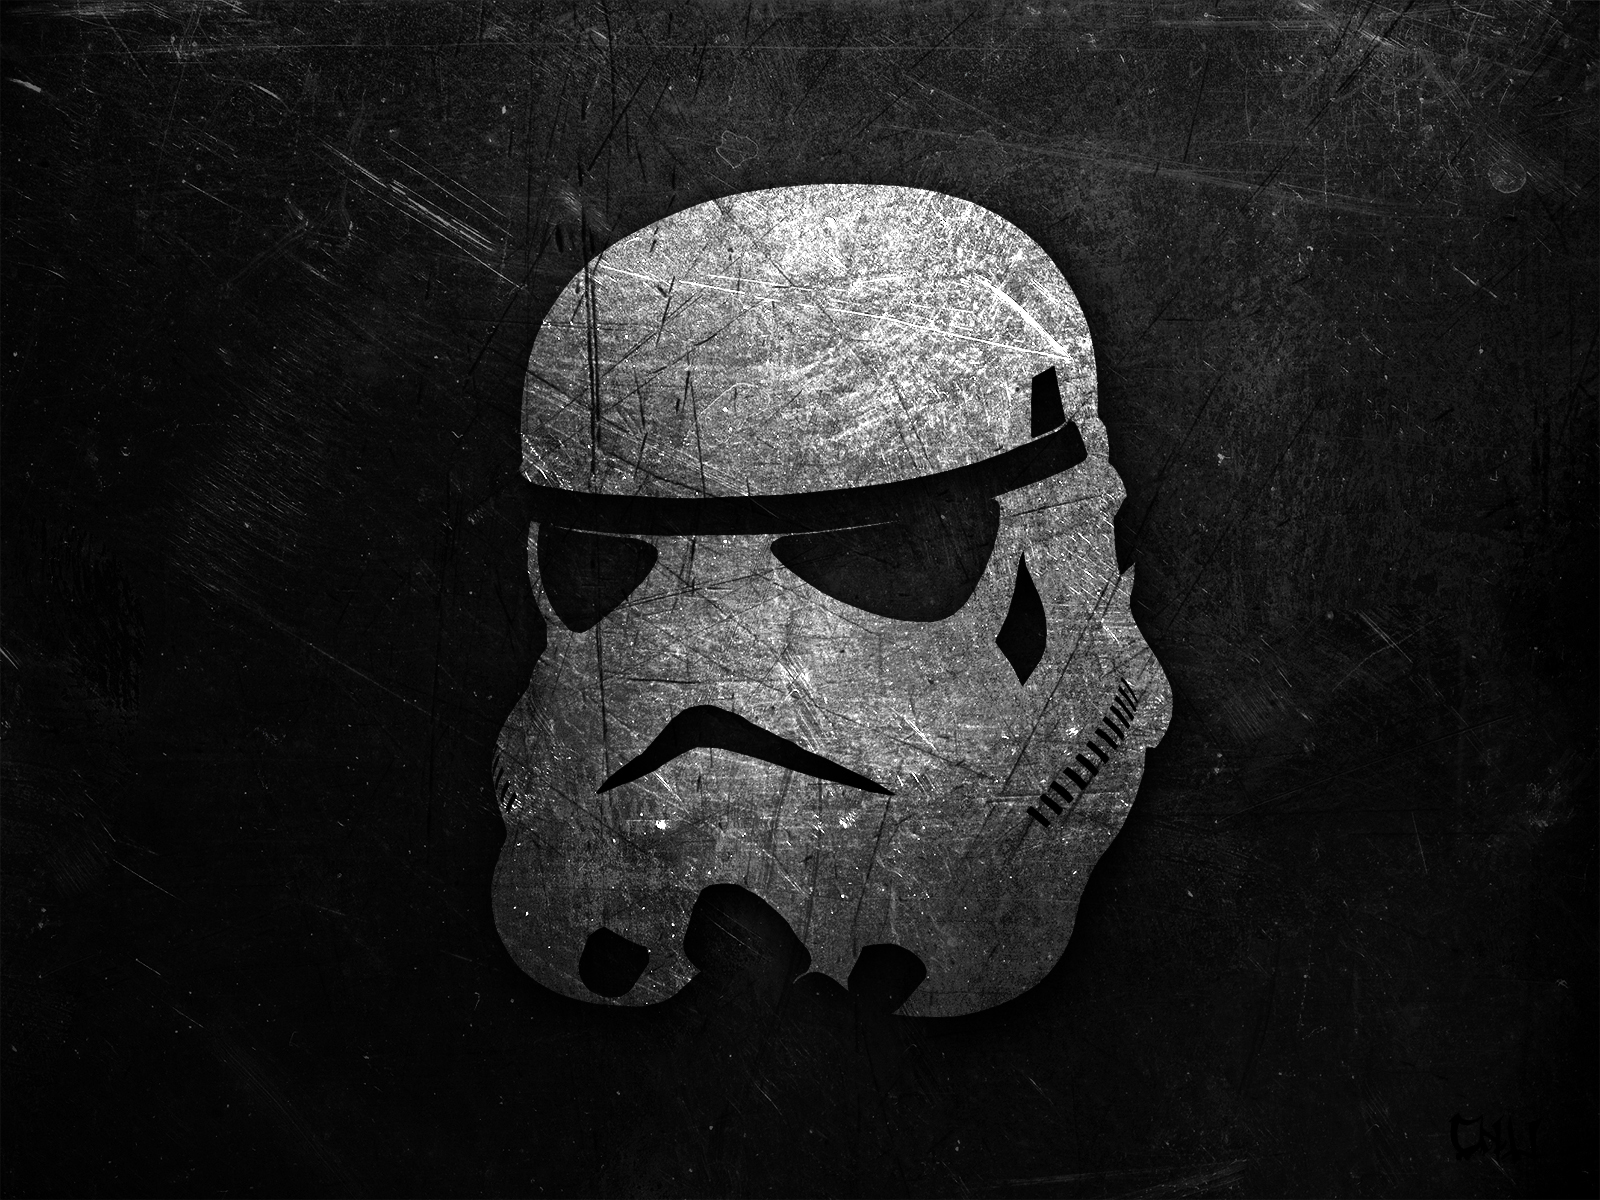  clubs star wars images 26662710 title stormtrooper wallpaper wallpaper